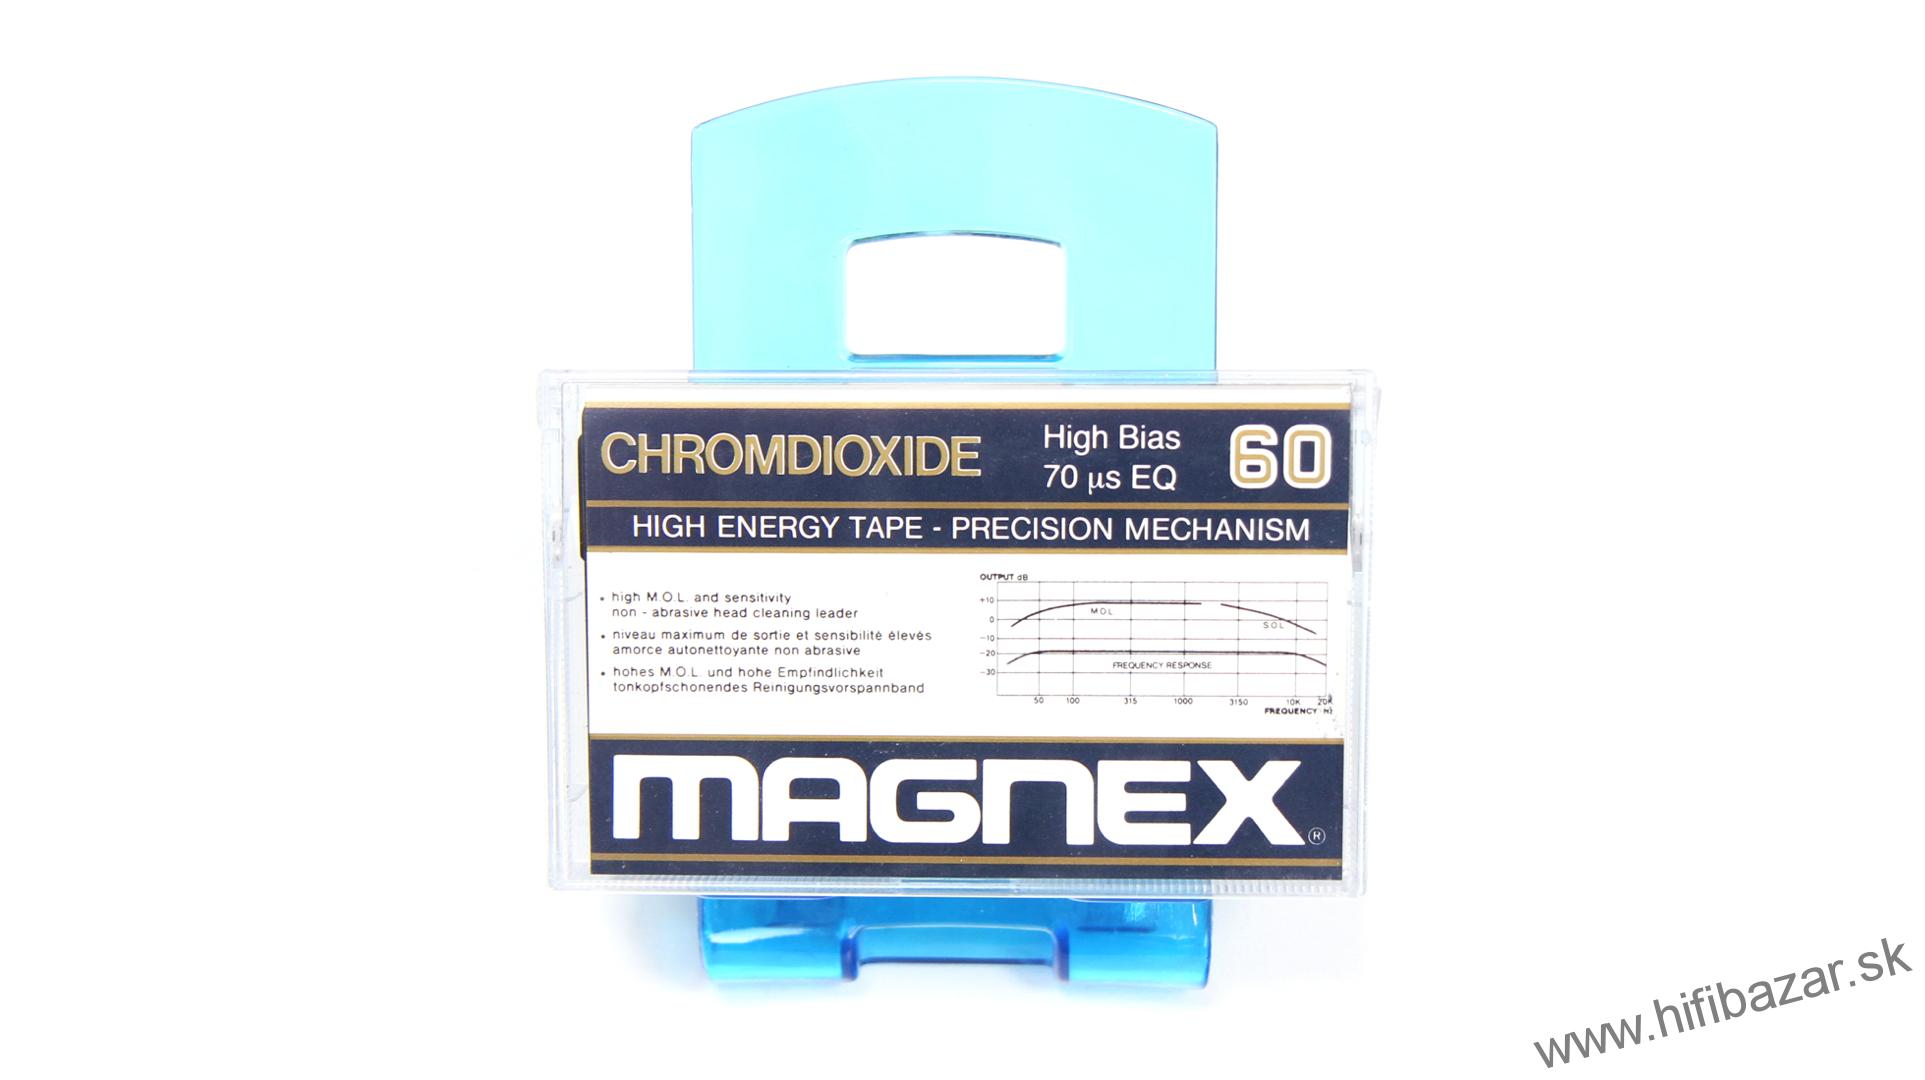 MAGNEX 60 Chromdioxide